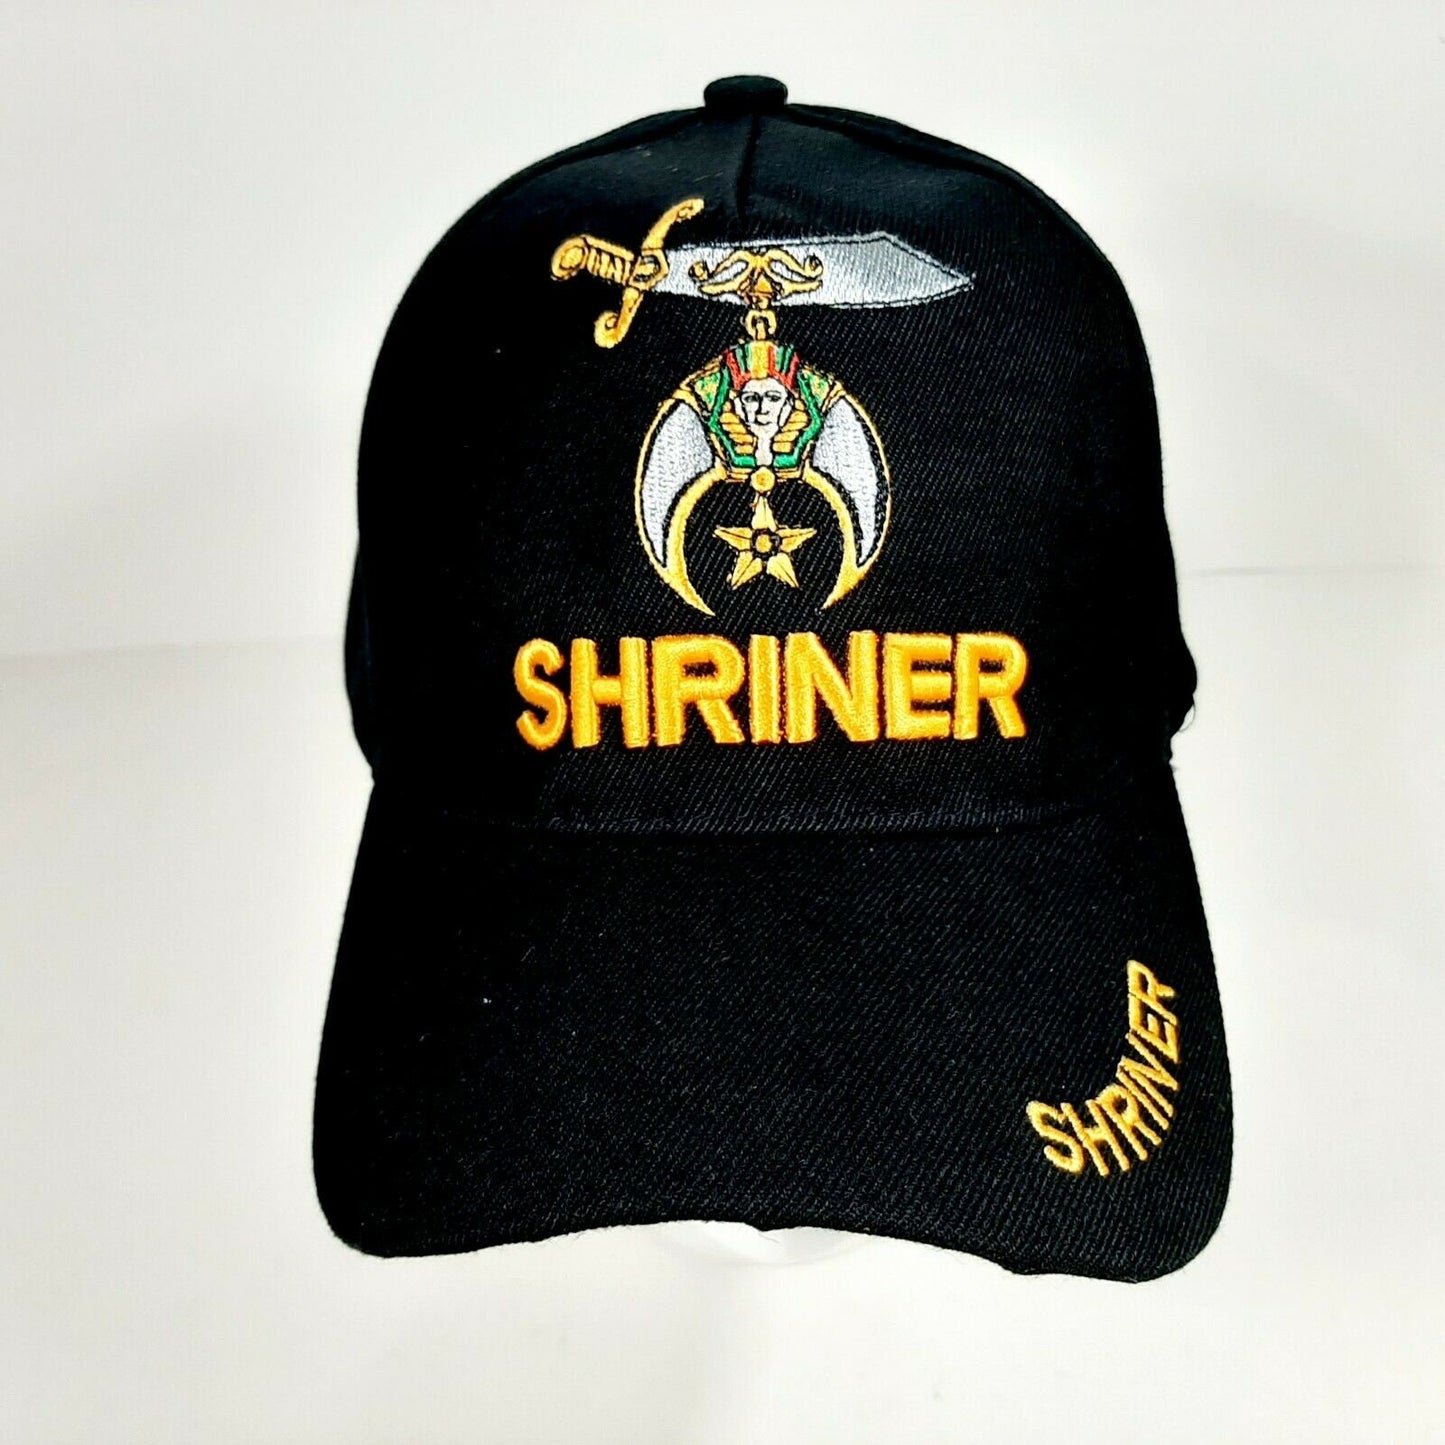 Shriner Men's Ball Cap Hat Black Embroidered Acrylic